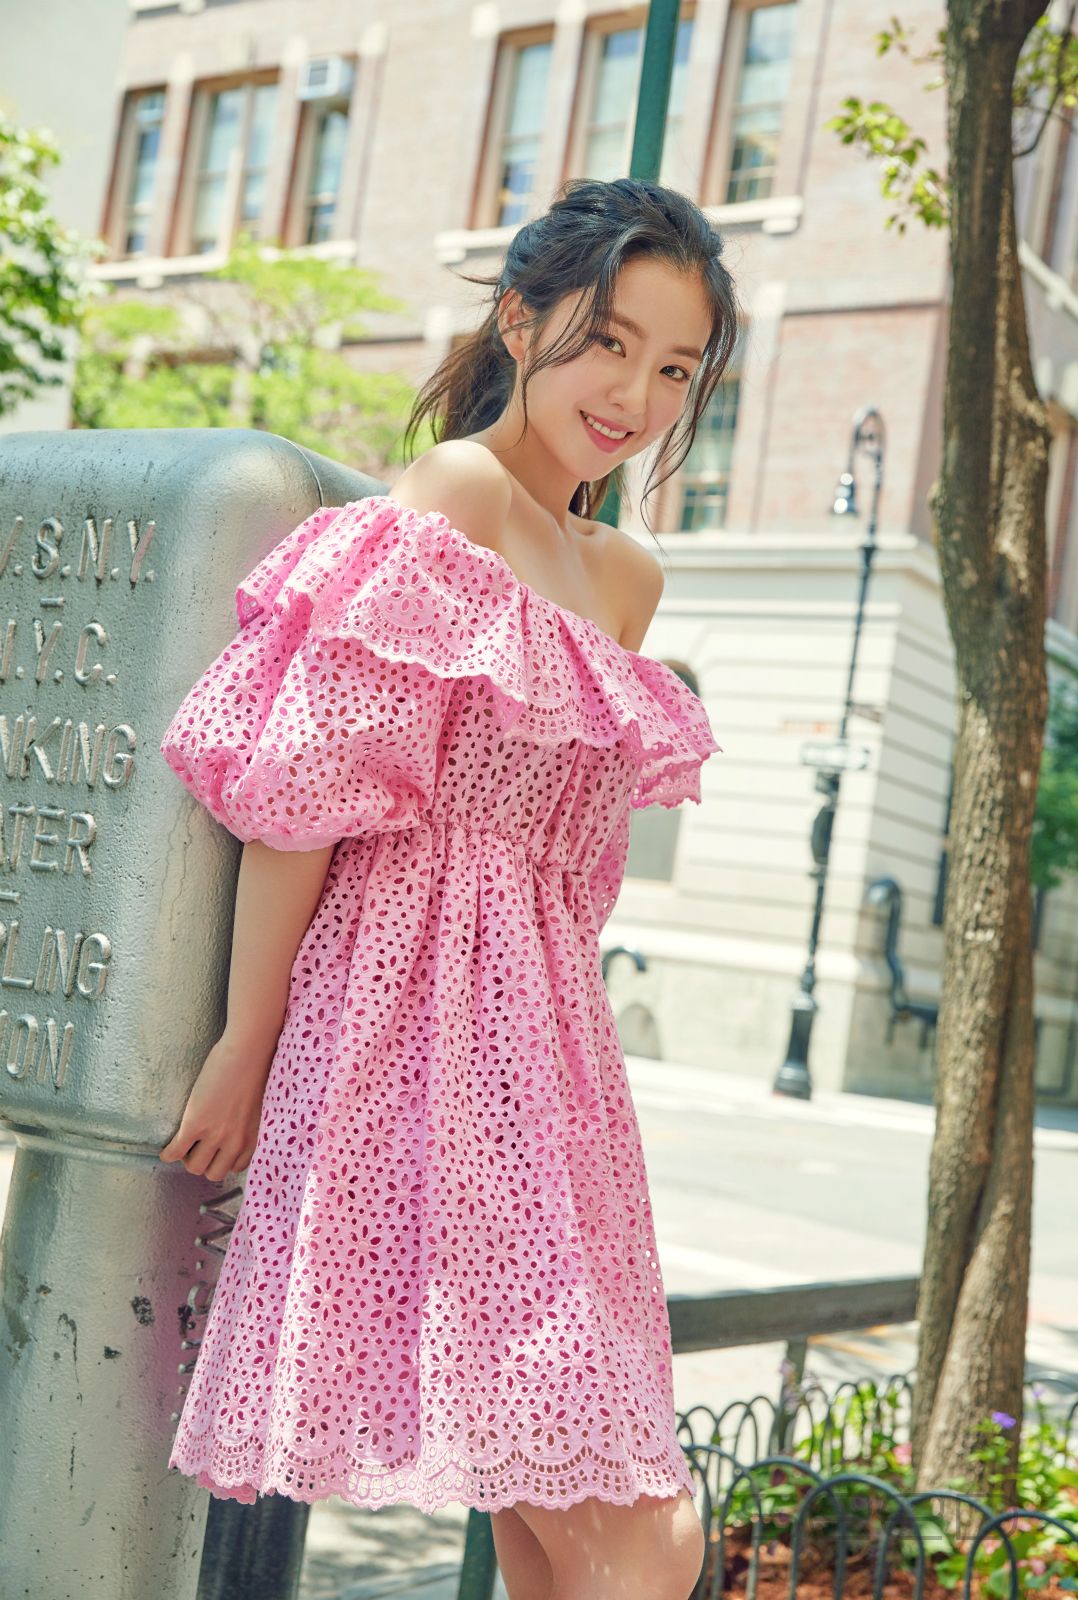 Irene Red Velvet Bae Joo Hyun Singer K Pop Bare Shoulders Smiling Looking At Viewer 1078x1600